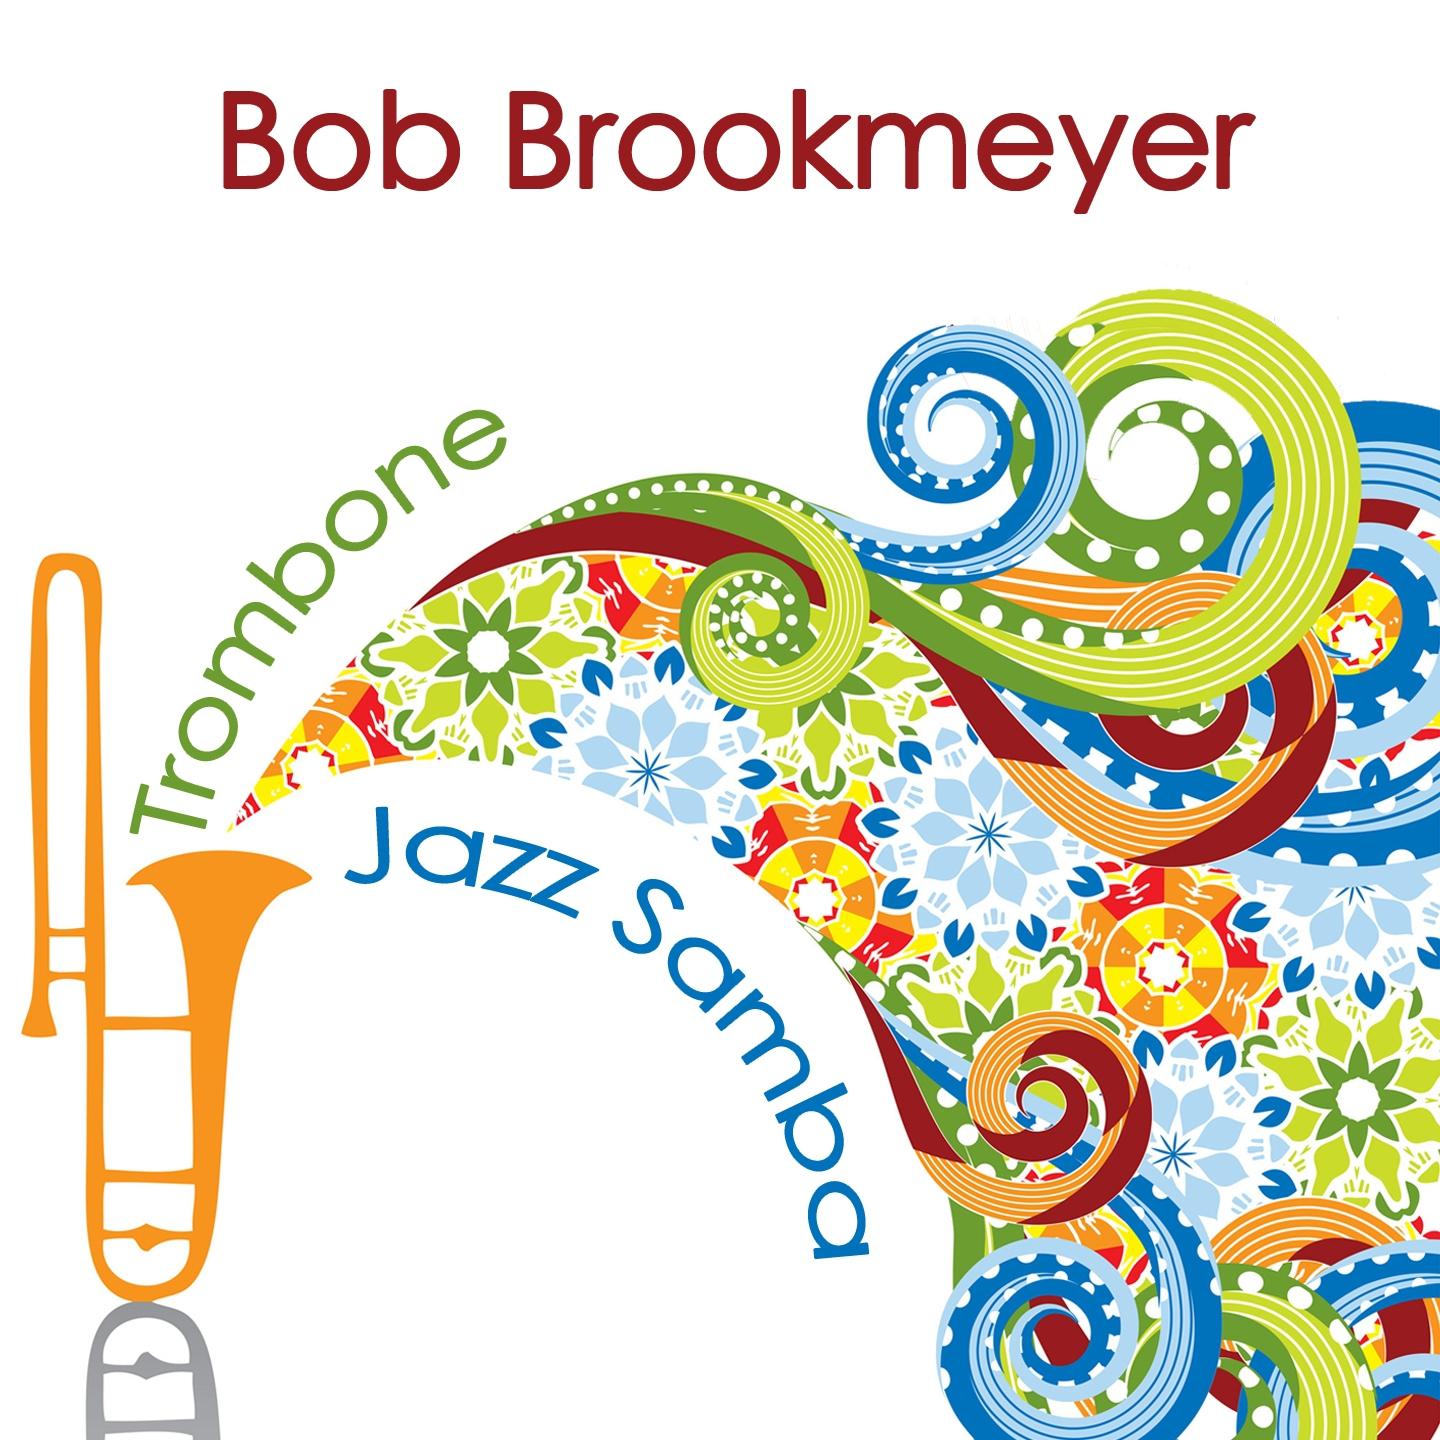 Постер альбома Trombone Jazz Samba